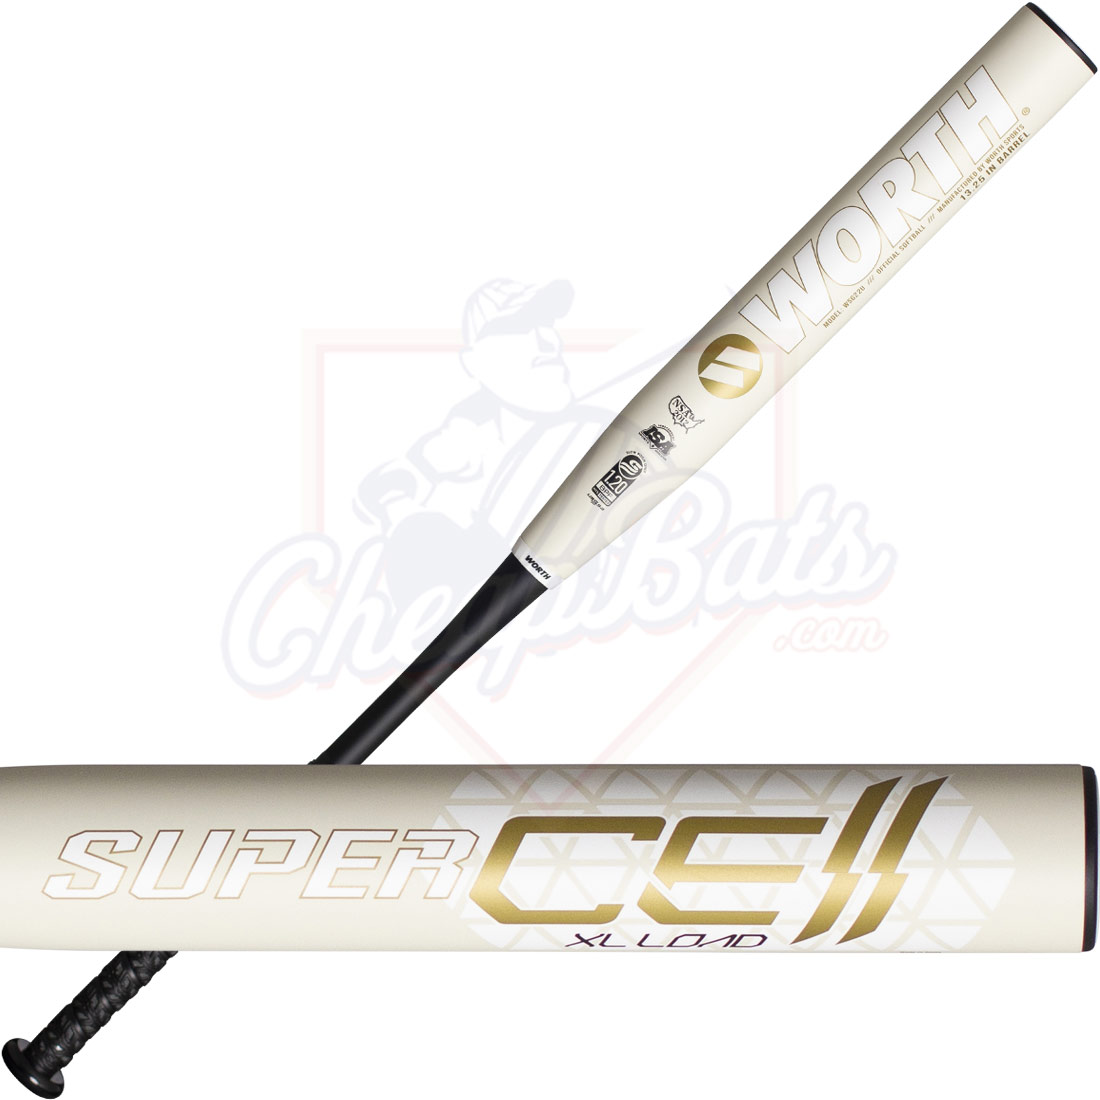 Supercell Gold Slowpitch Softball Bat 2022 USSSA XL Worth 12.5 Barrel 